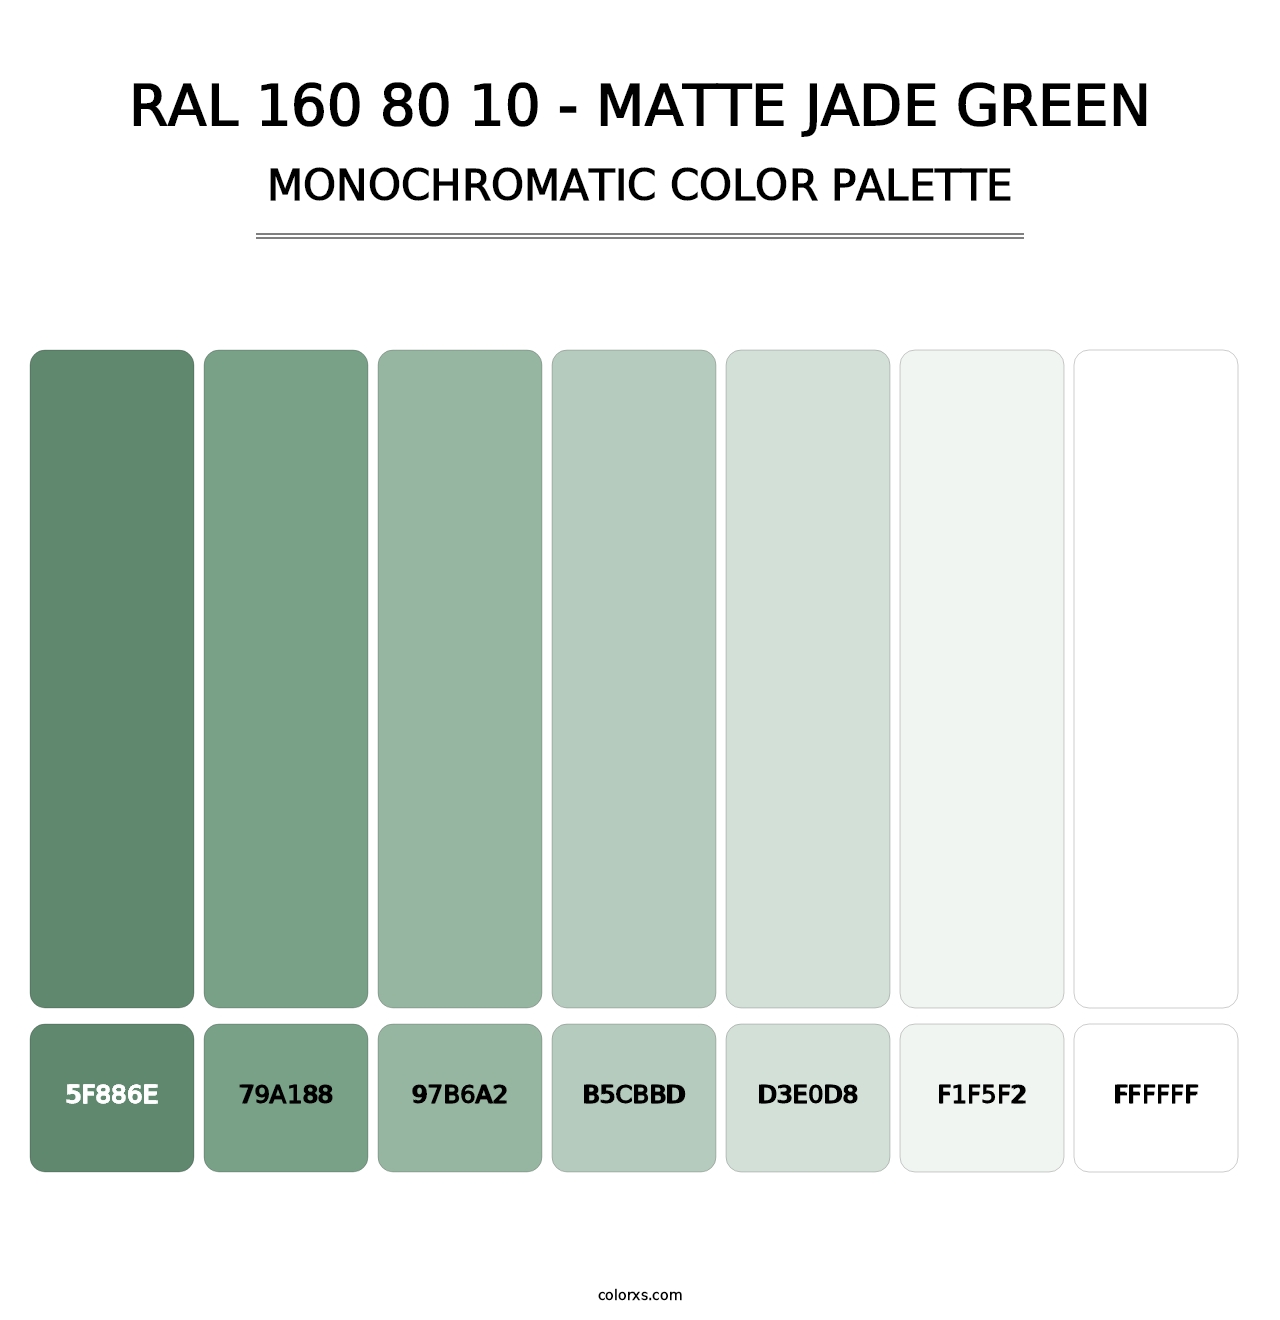 RAL 160 80 10 - Matte Jade Green - Monochromatic Color Palette